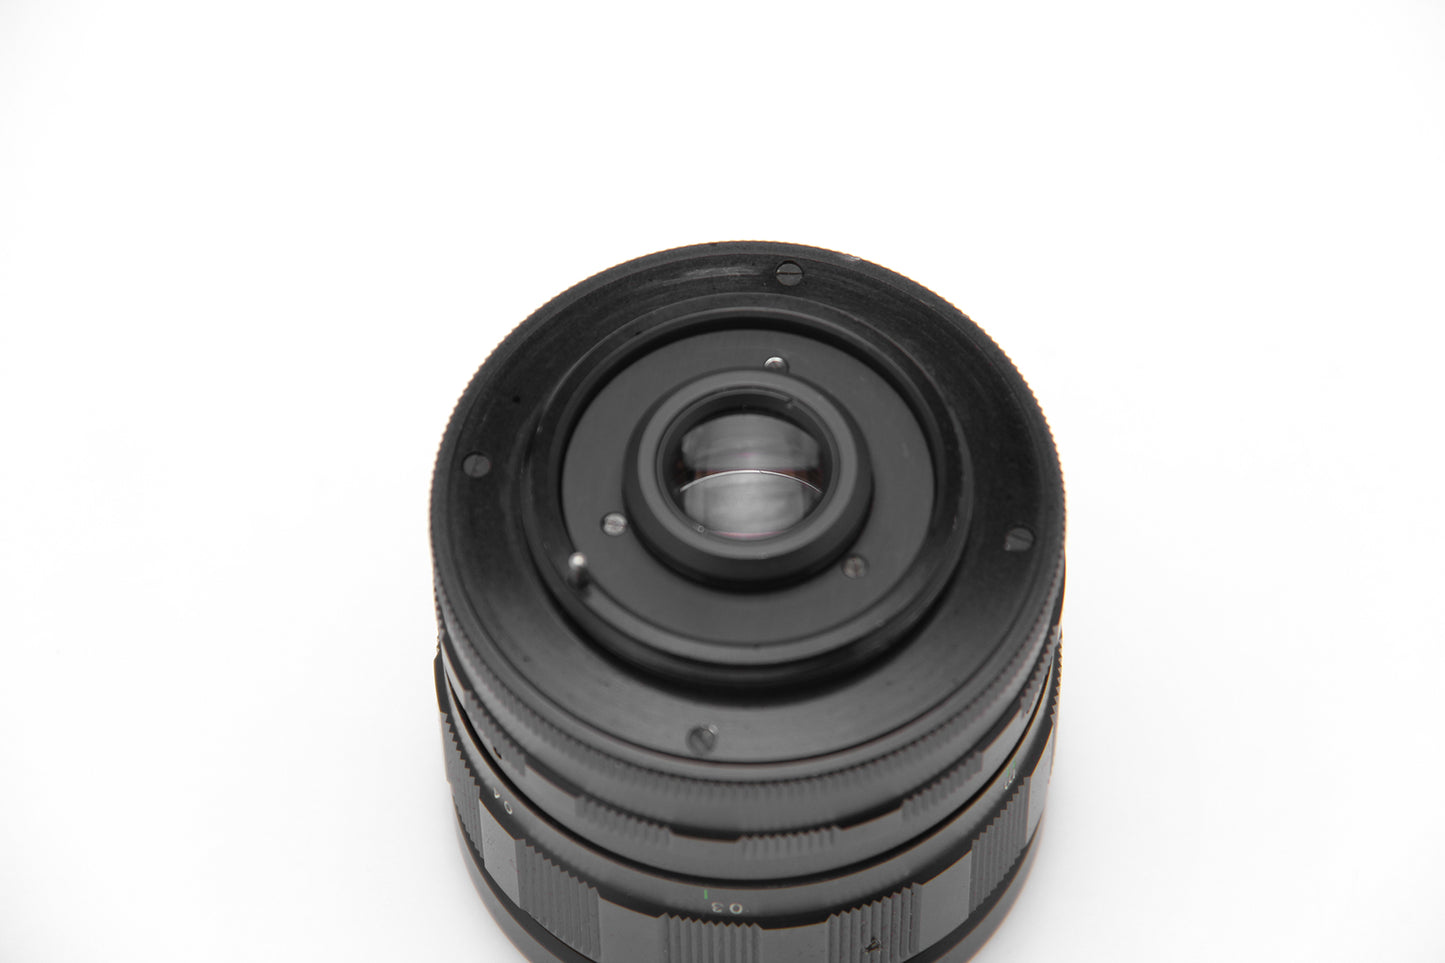 Used Rikenon 28mm f2.8 Prime Lens for film camera